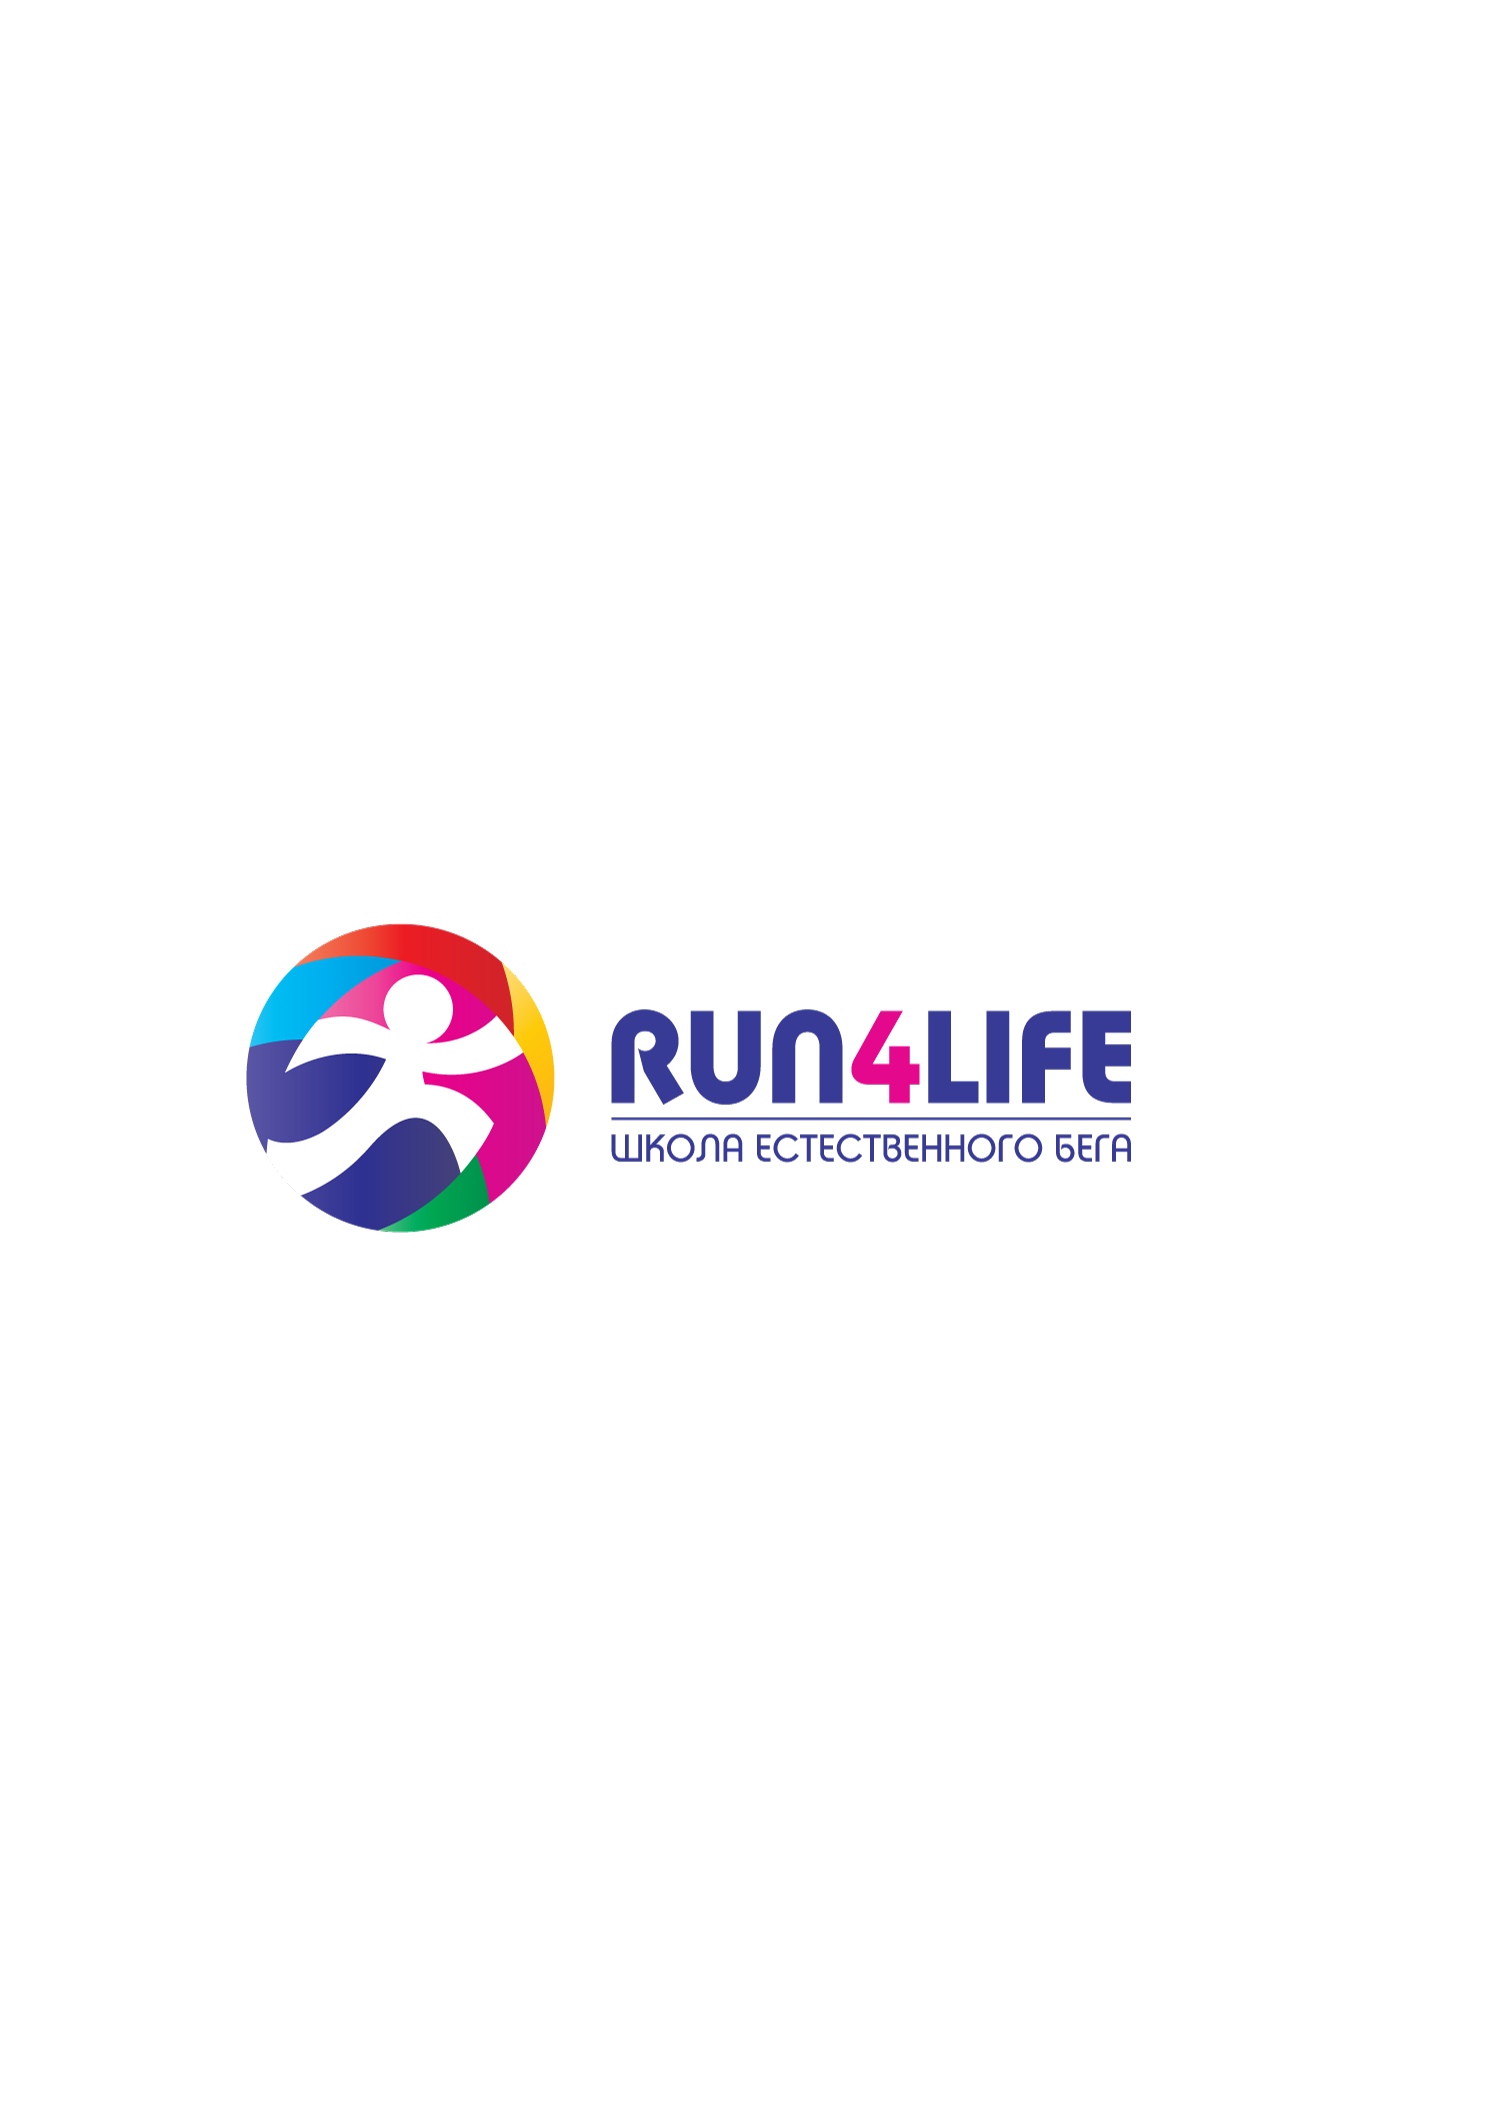 Run4life